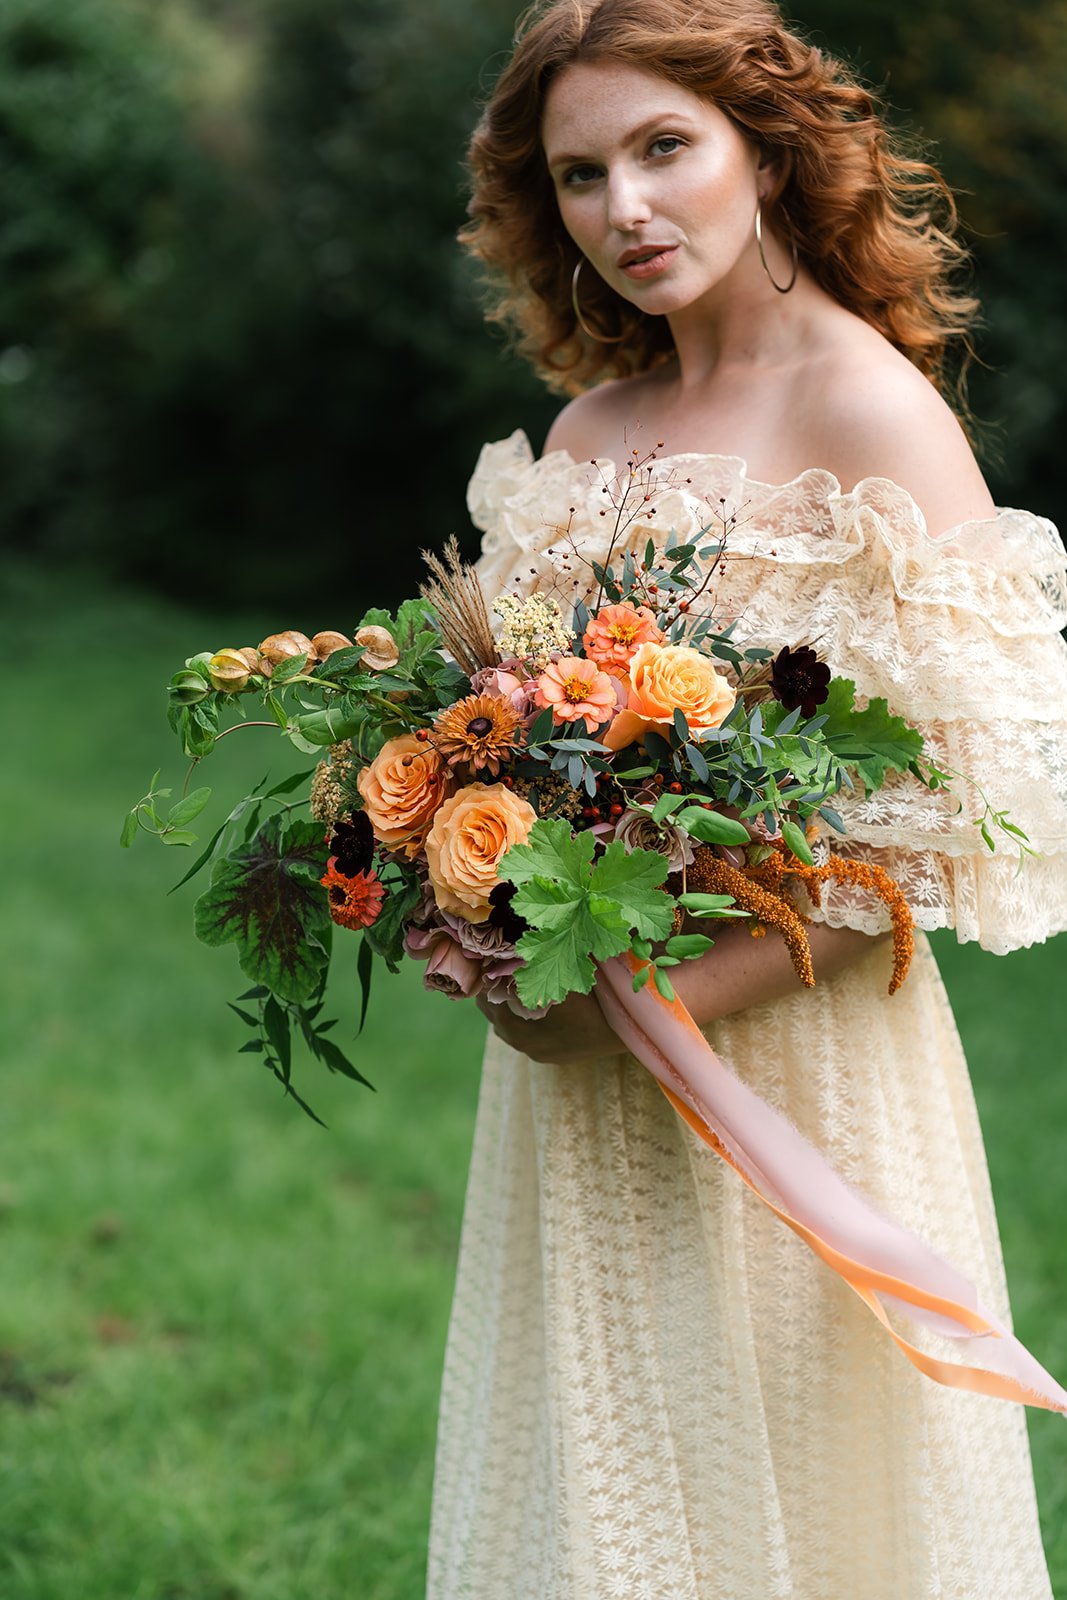 Bridal bouquets masterclass led by The Bath Flower School